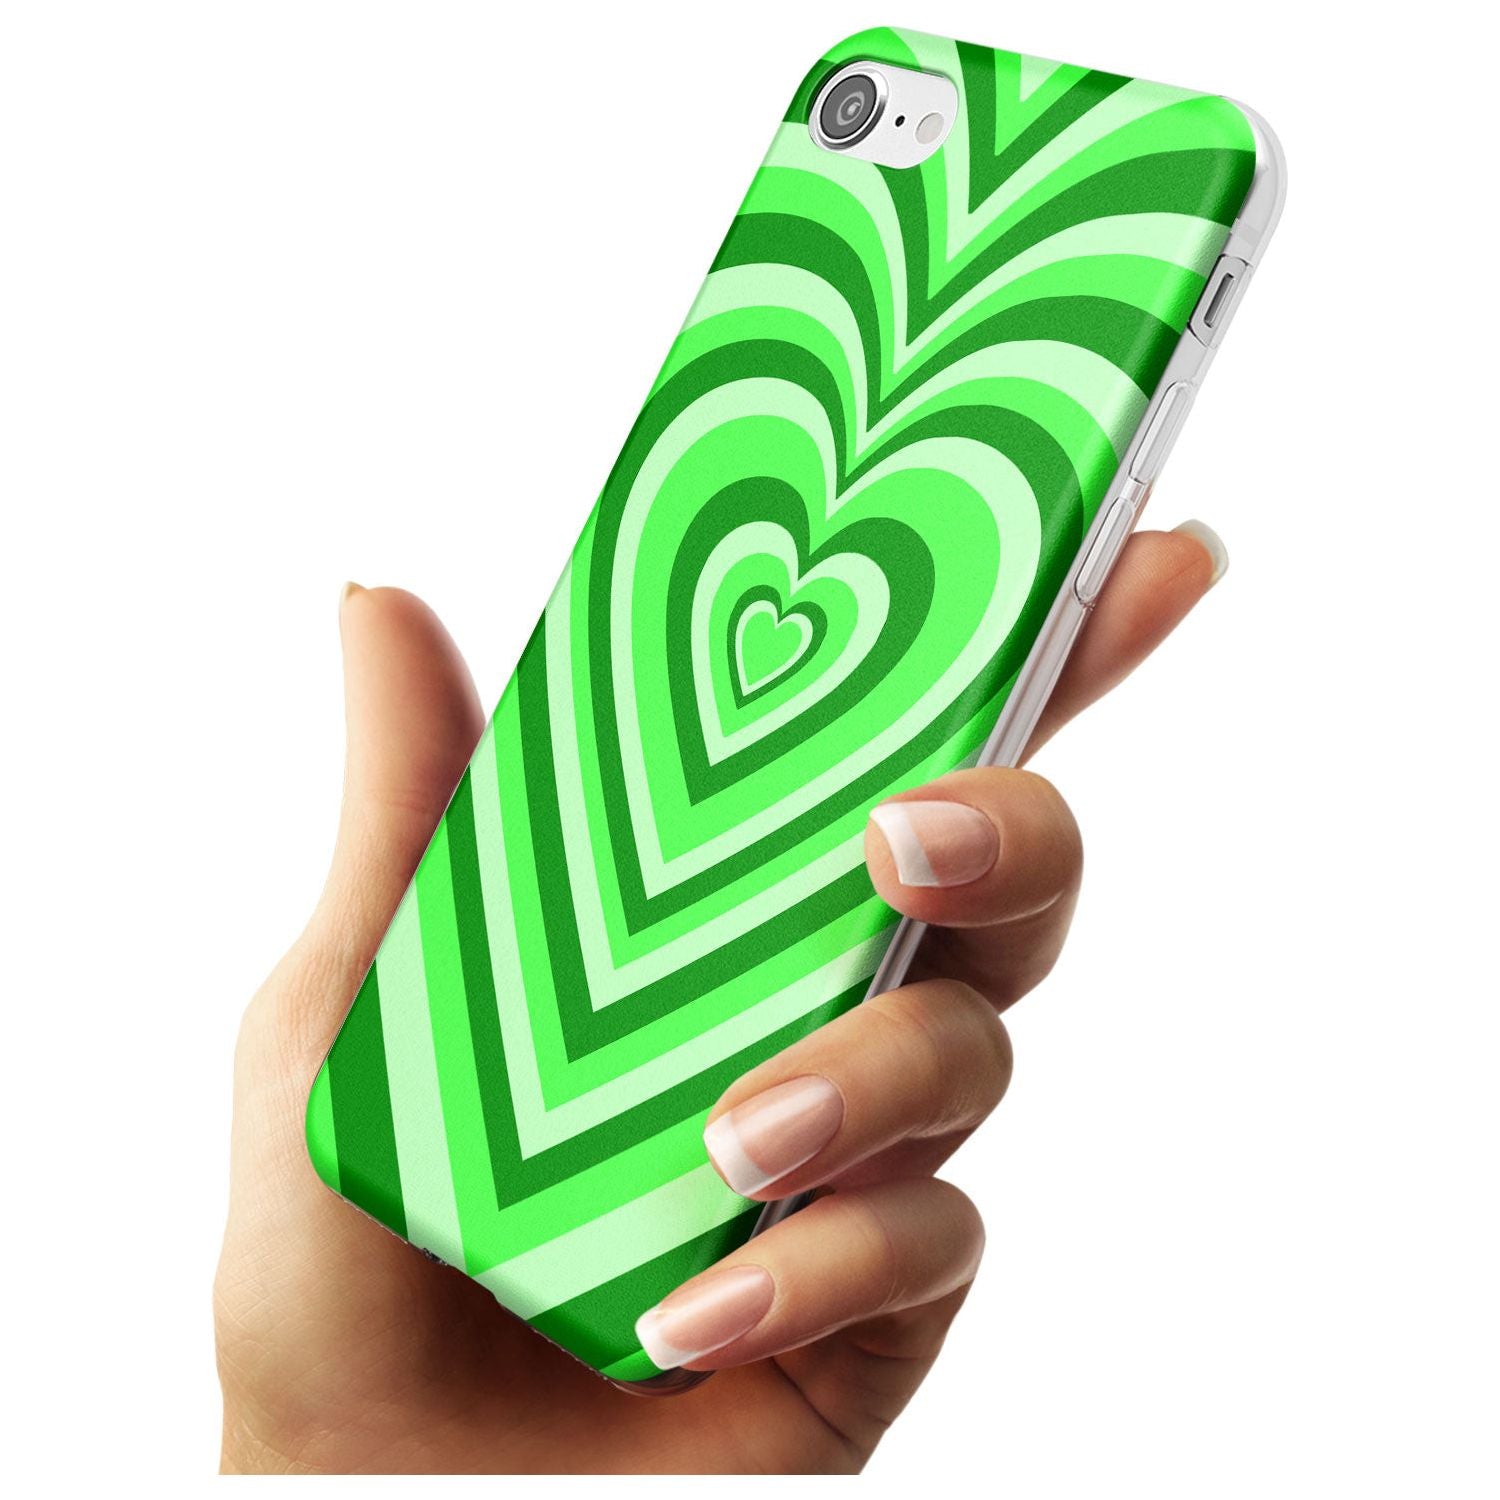 Green Heart Illusion Slim TPU Phone Case for iPhone SE 8 7 Plus